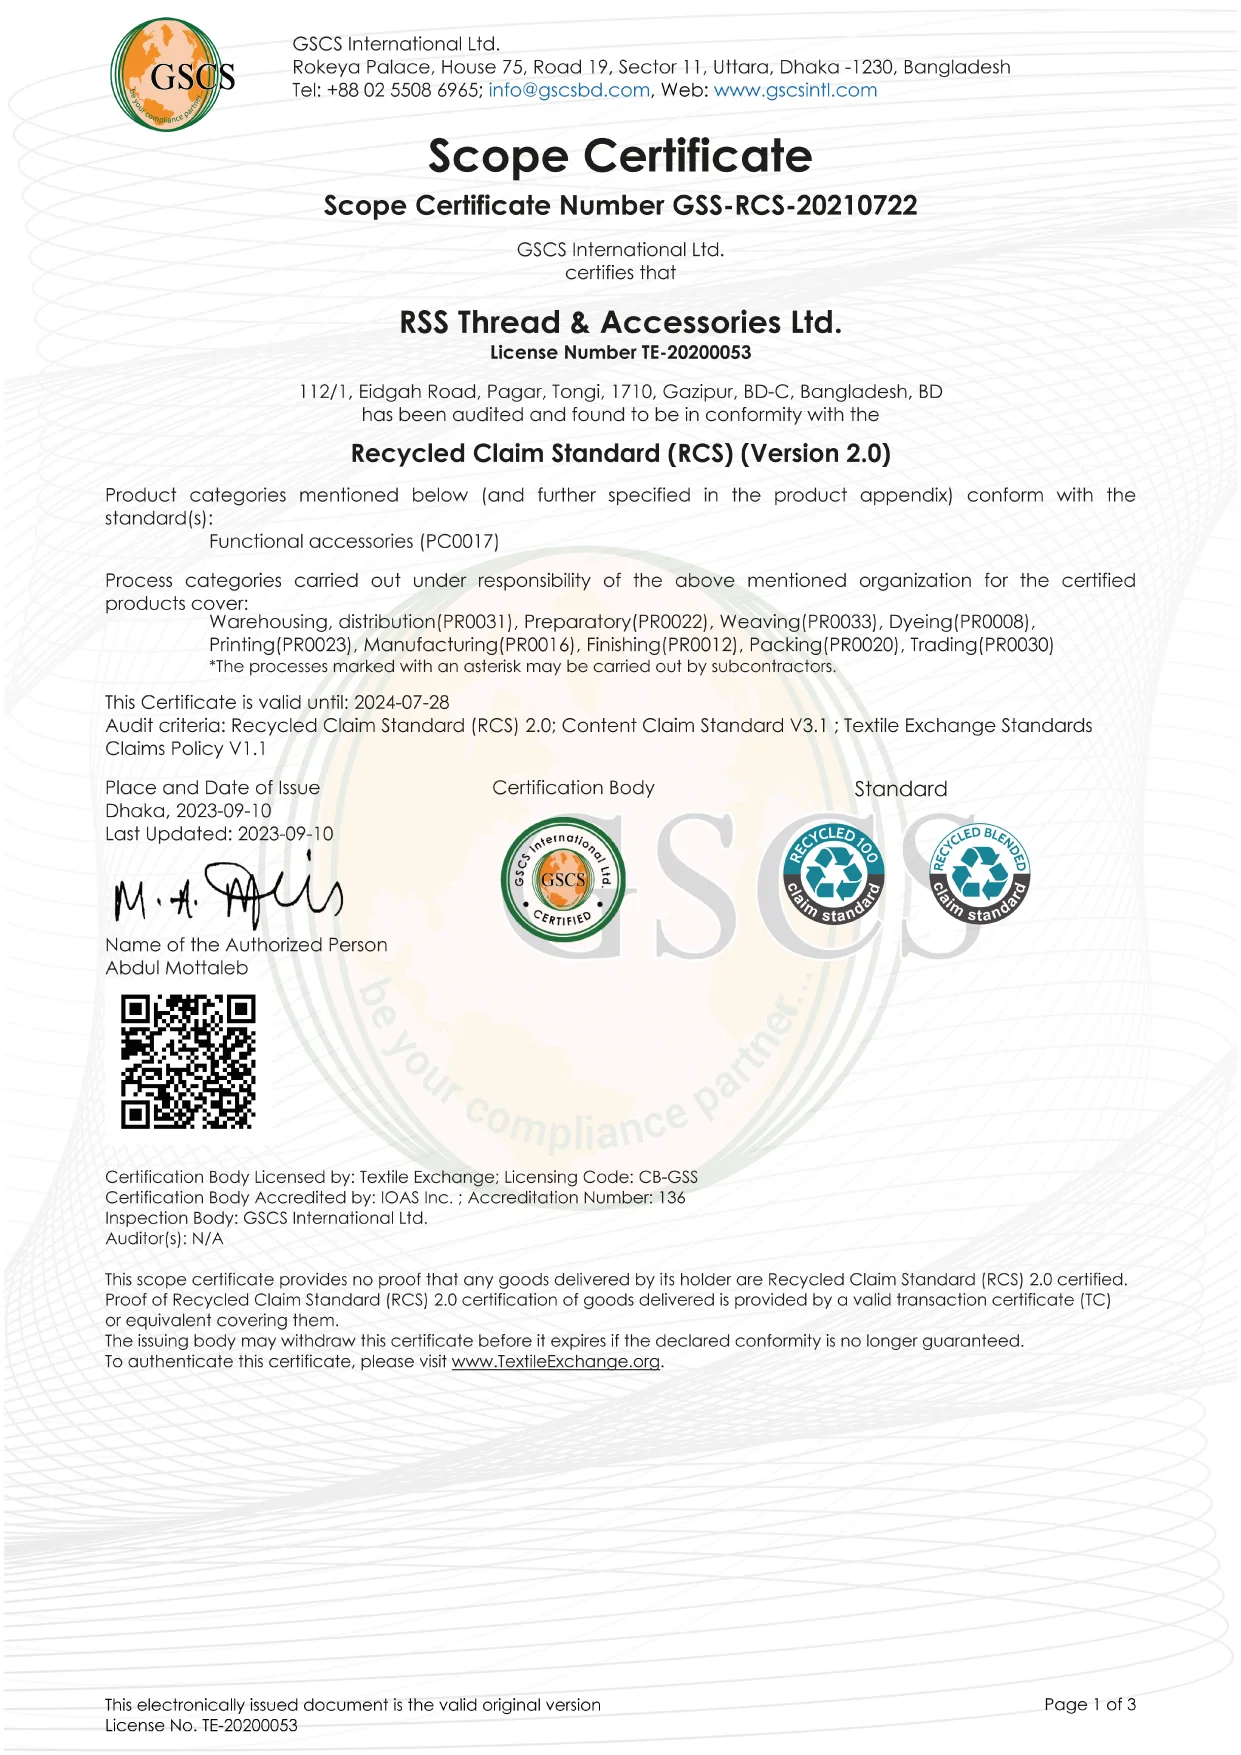 GSCS RCS RSS Thread & Accessories Ltd